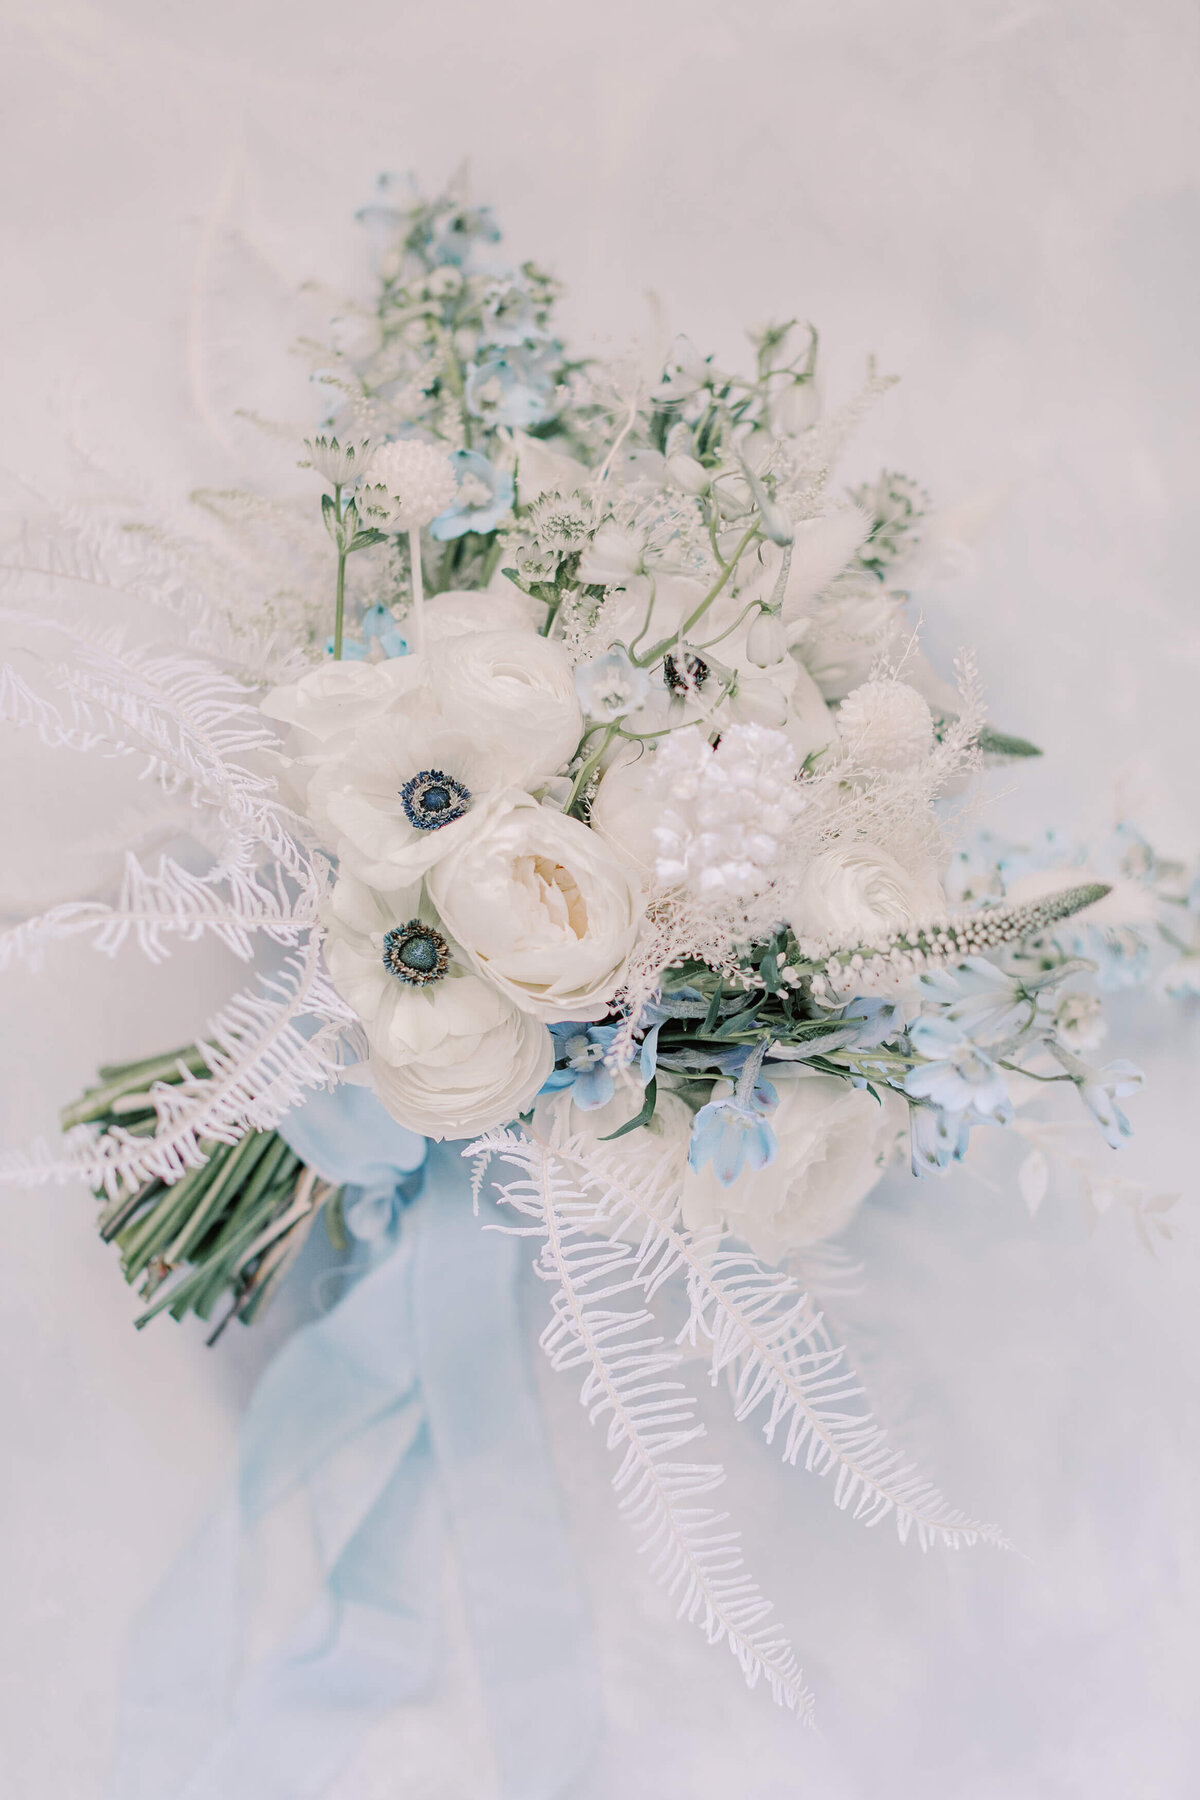 Winter Wedding at Chateau Saint-Joseph - Jeanette Merstrand Photography - Victoria Engelen Flowers_0044